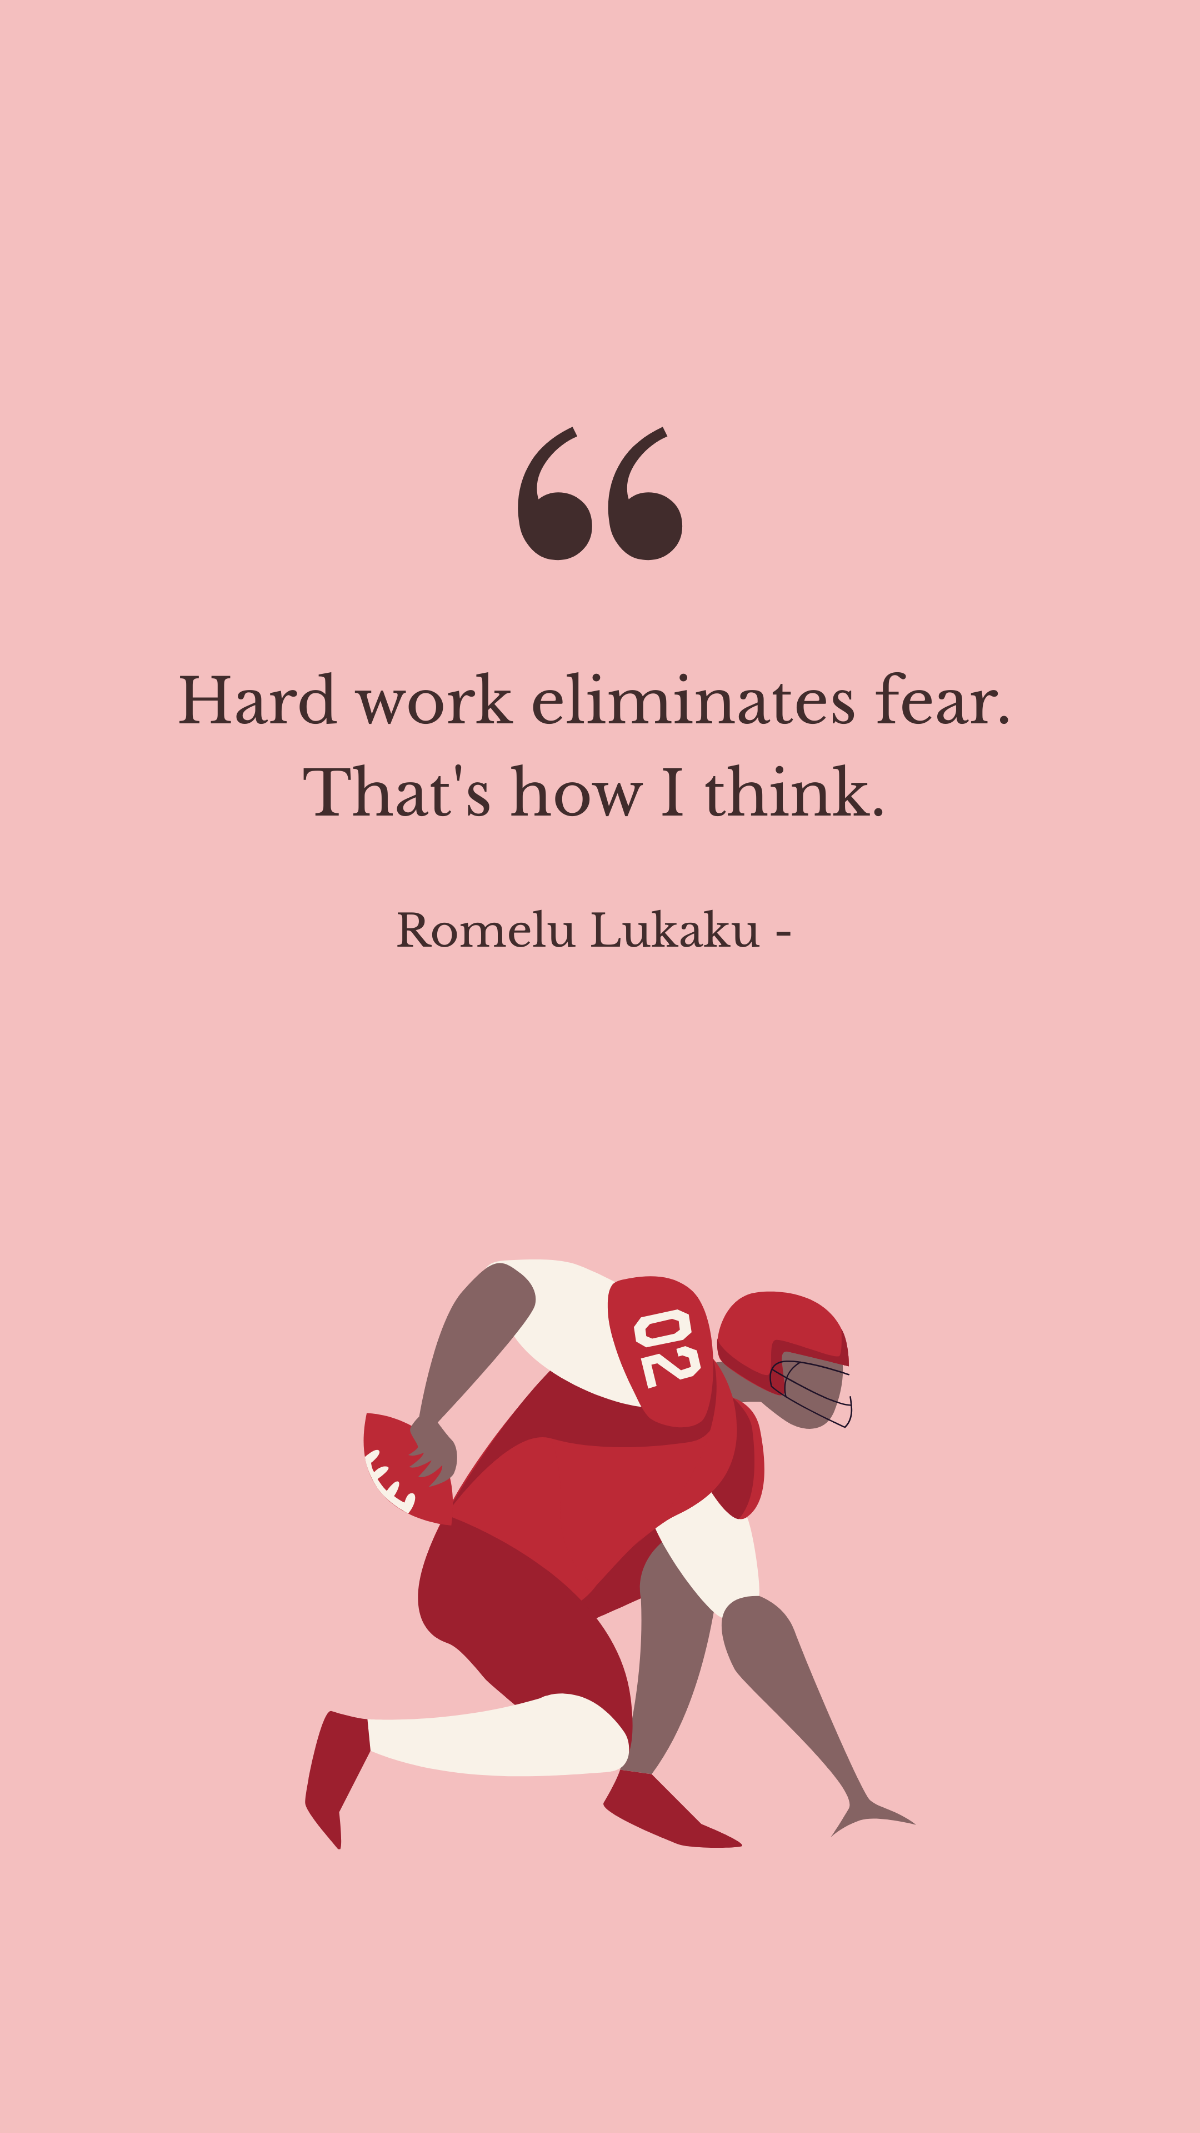 Romelu Lukaku - Hard work eliminates fear. That's how I think. Template